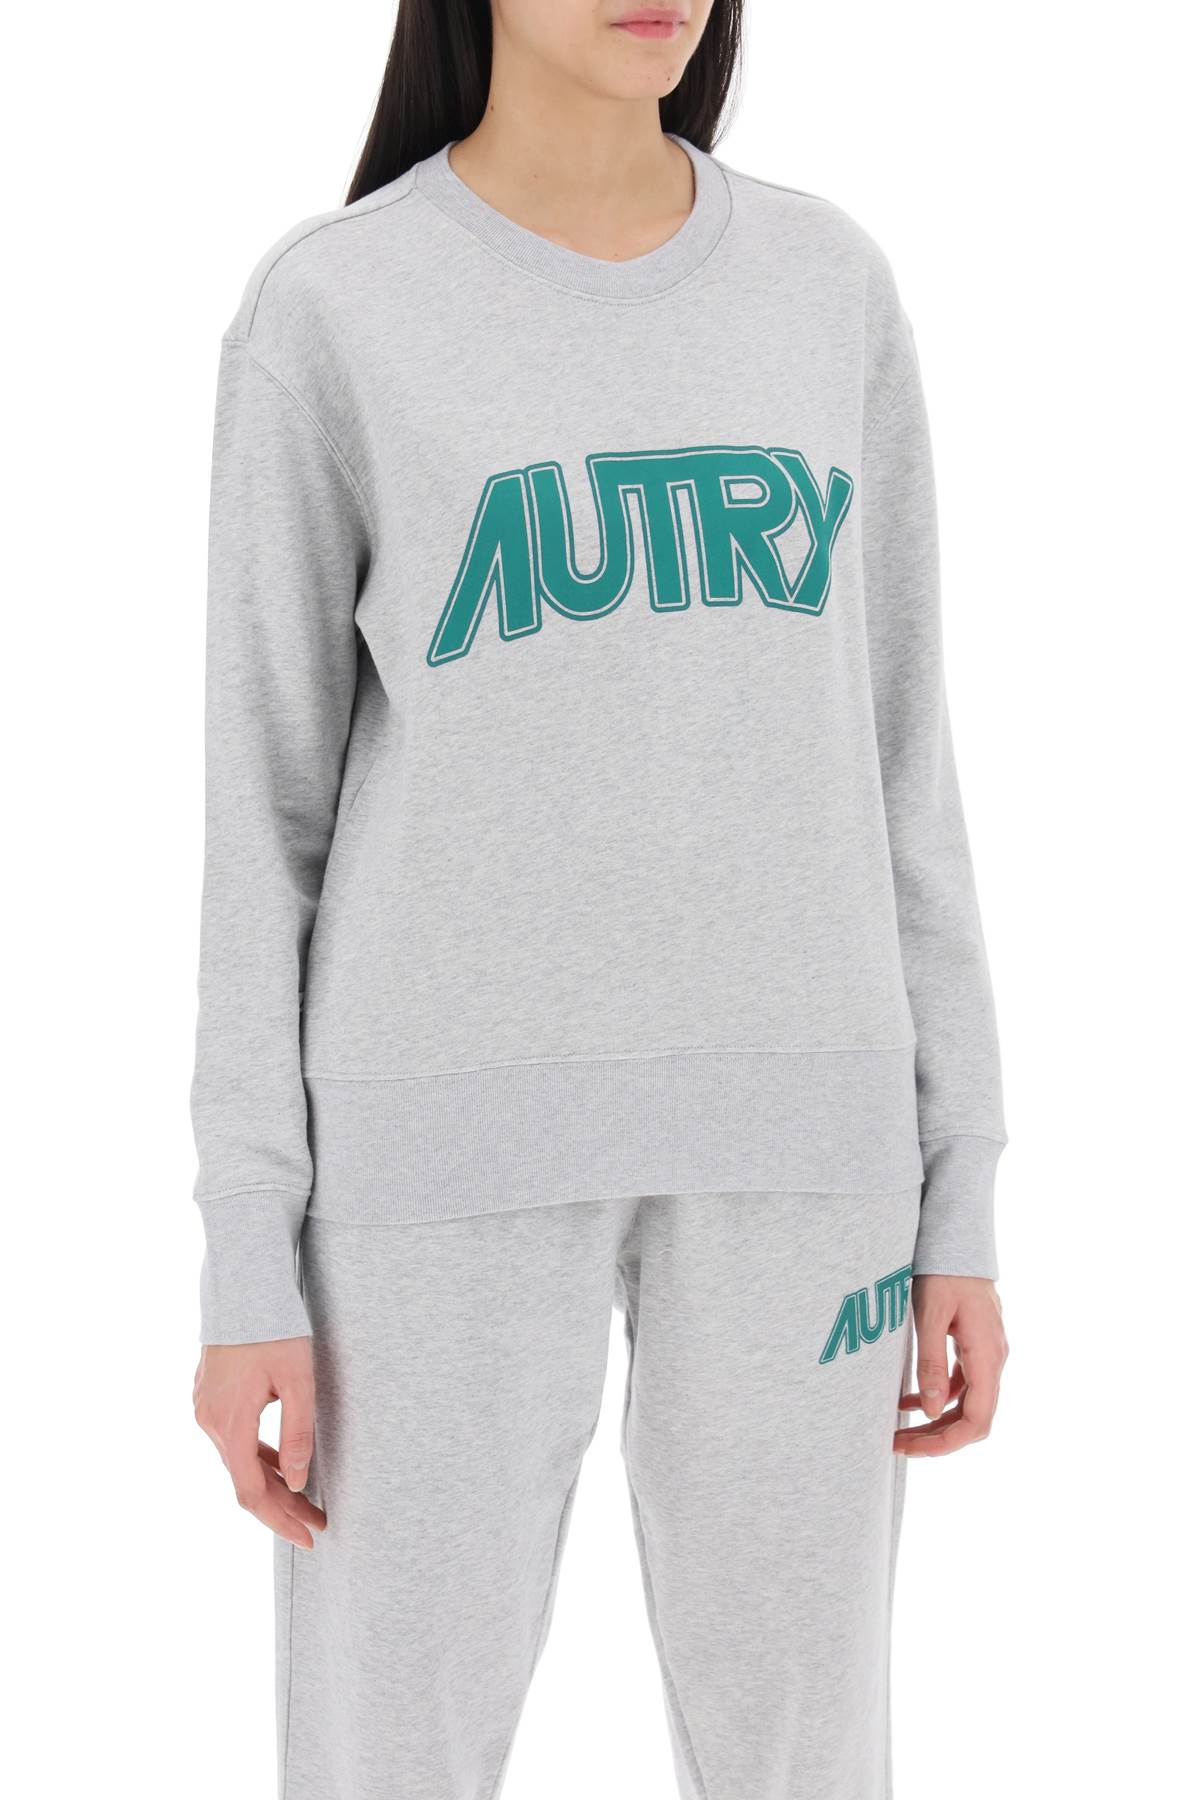 Autry sweatshirt with maxi logo print-1